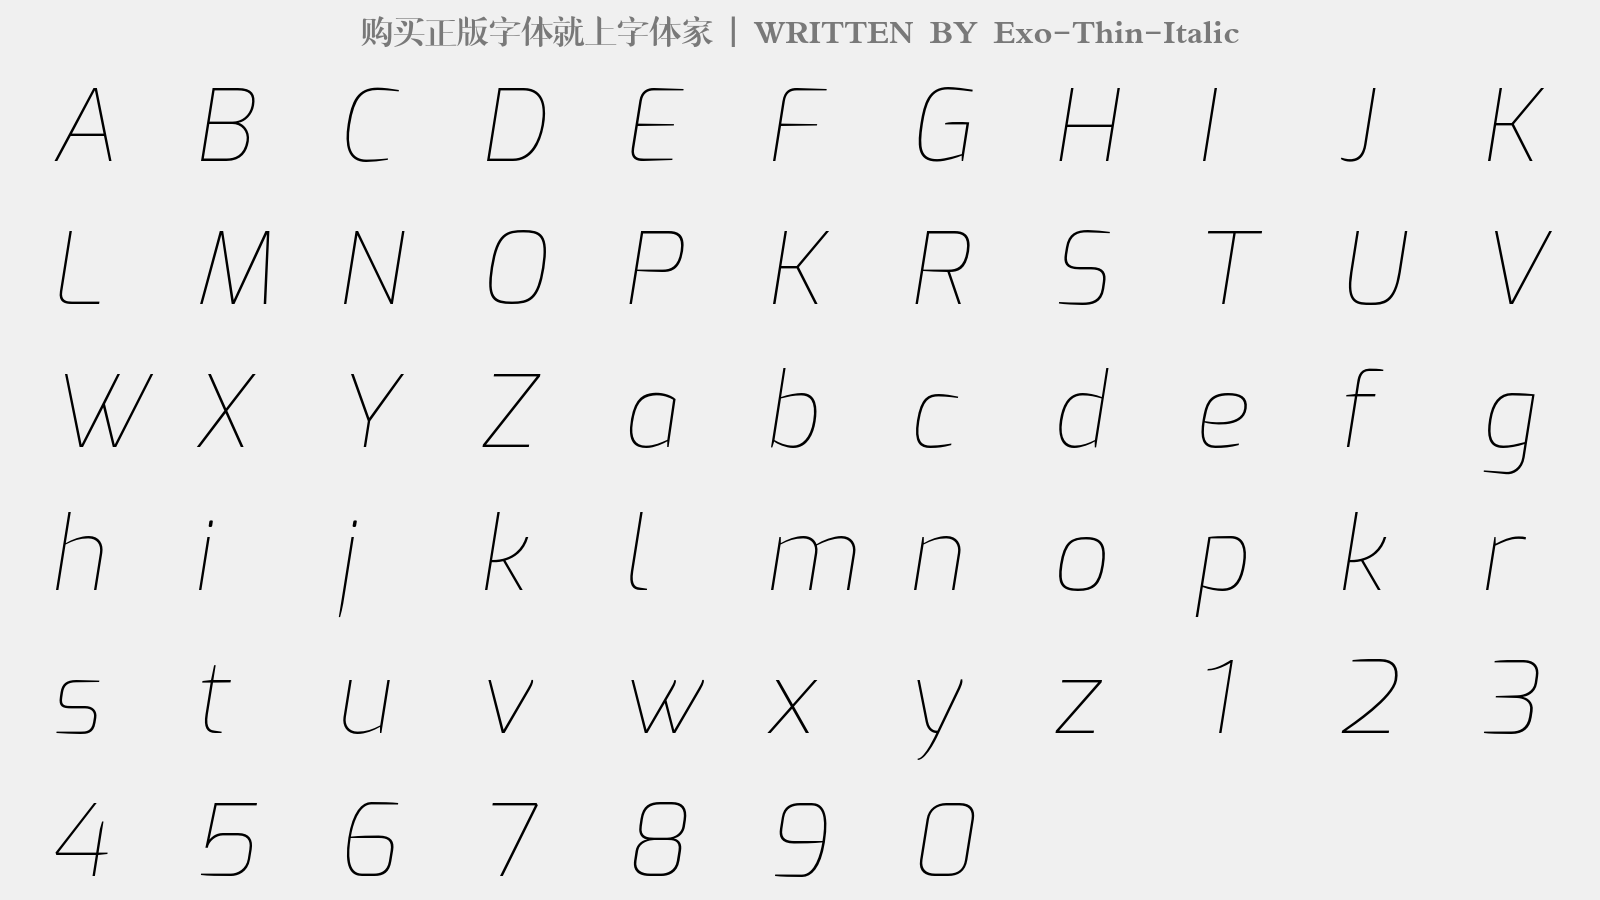 Exo-Thin-Italic - 大写字母/小写字母/数字